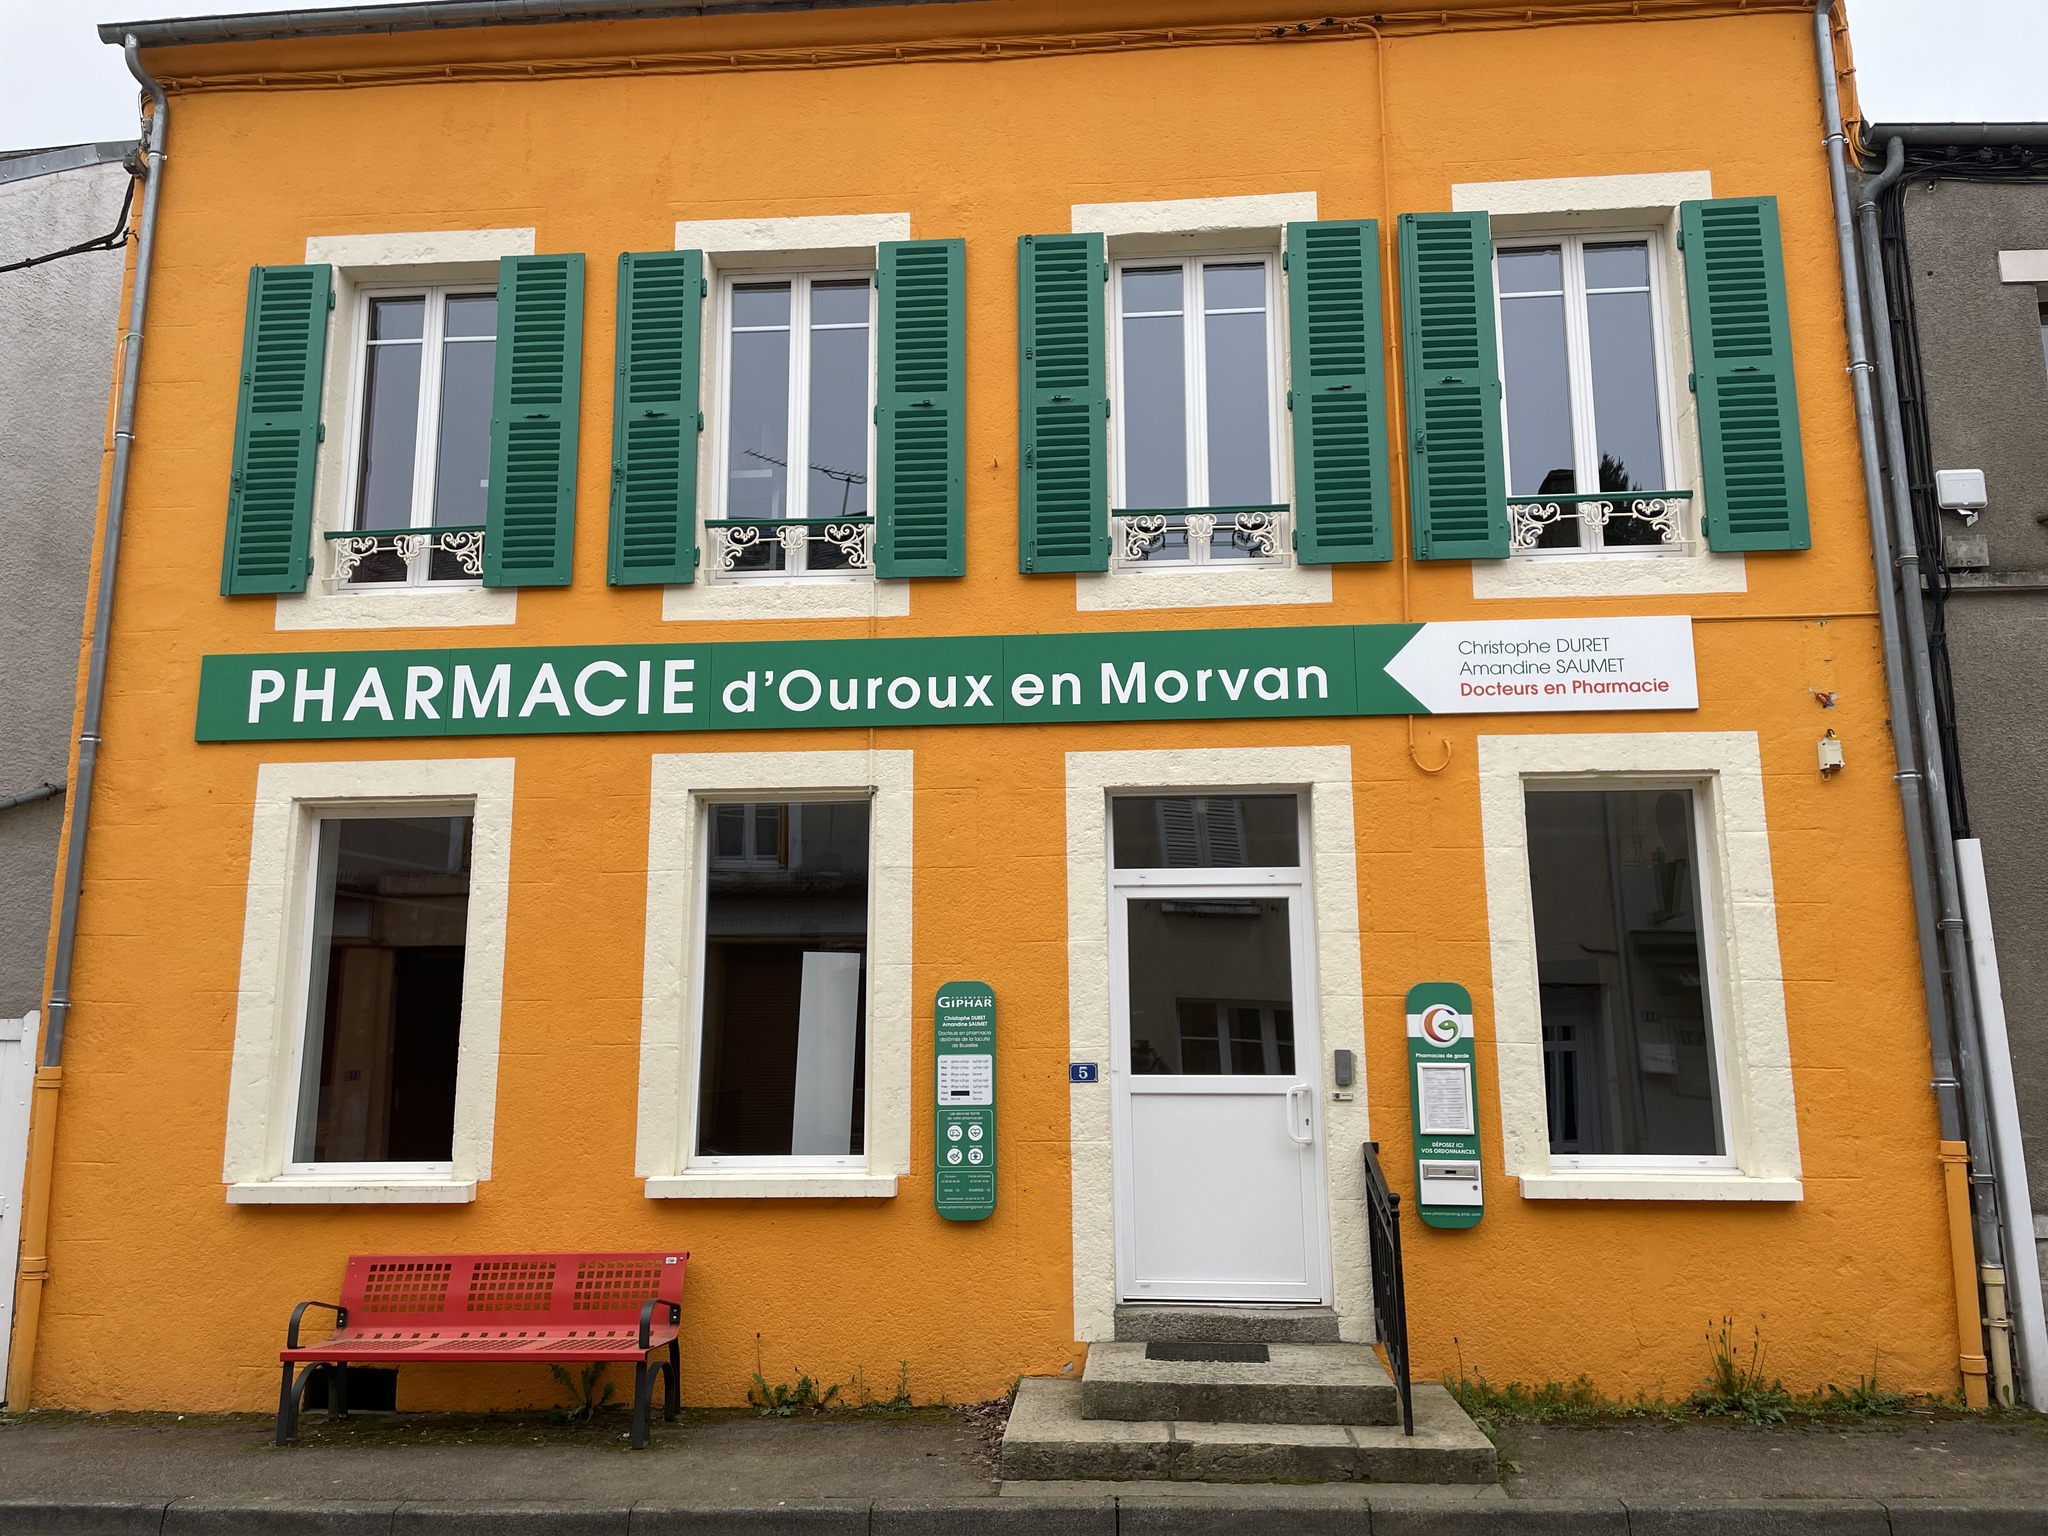 Vente pharmacie rurale - local commercial